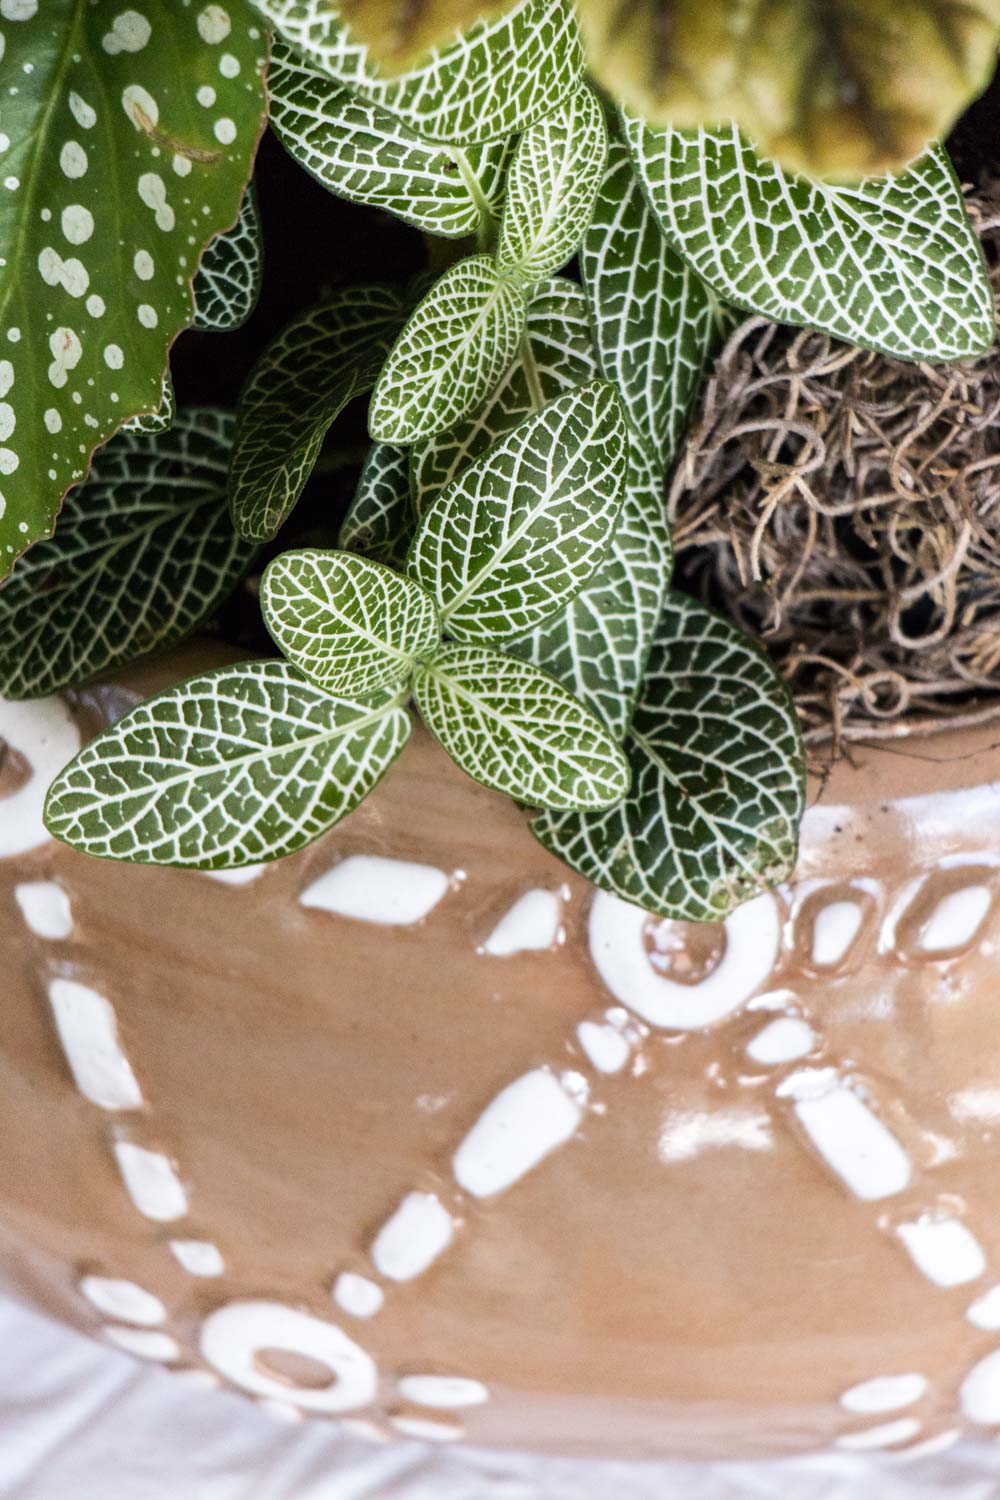 Fittonia verschaffeltii ’mini’ plant in a beautiful bogolan (mudcloth) inspired winter houseplant garden